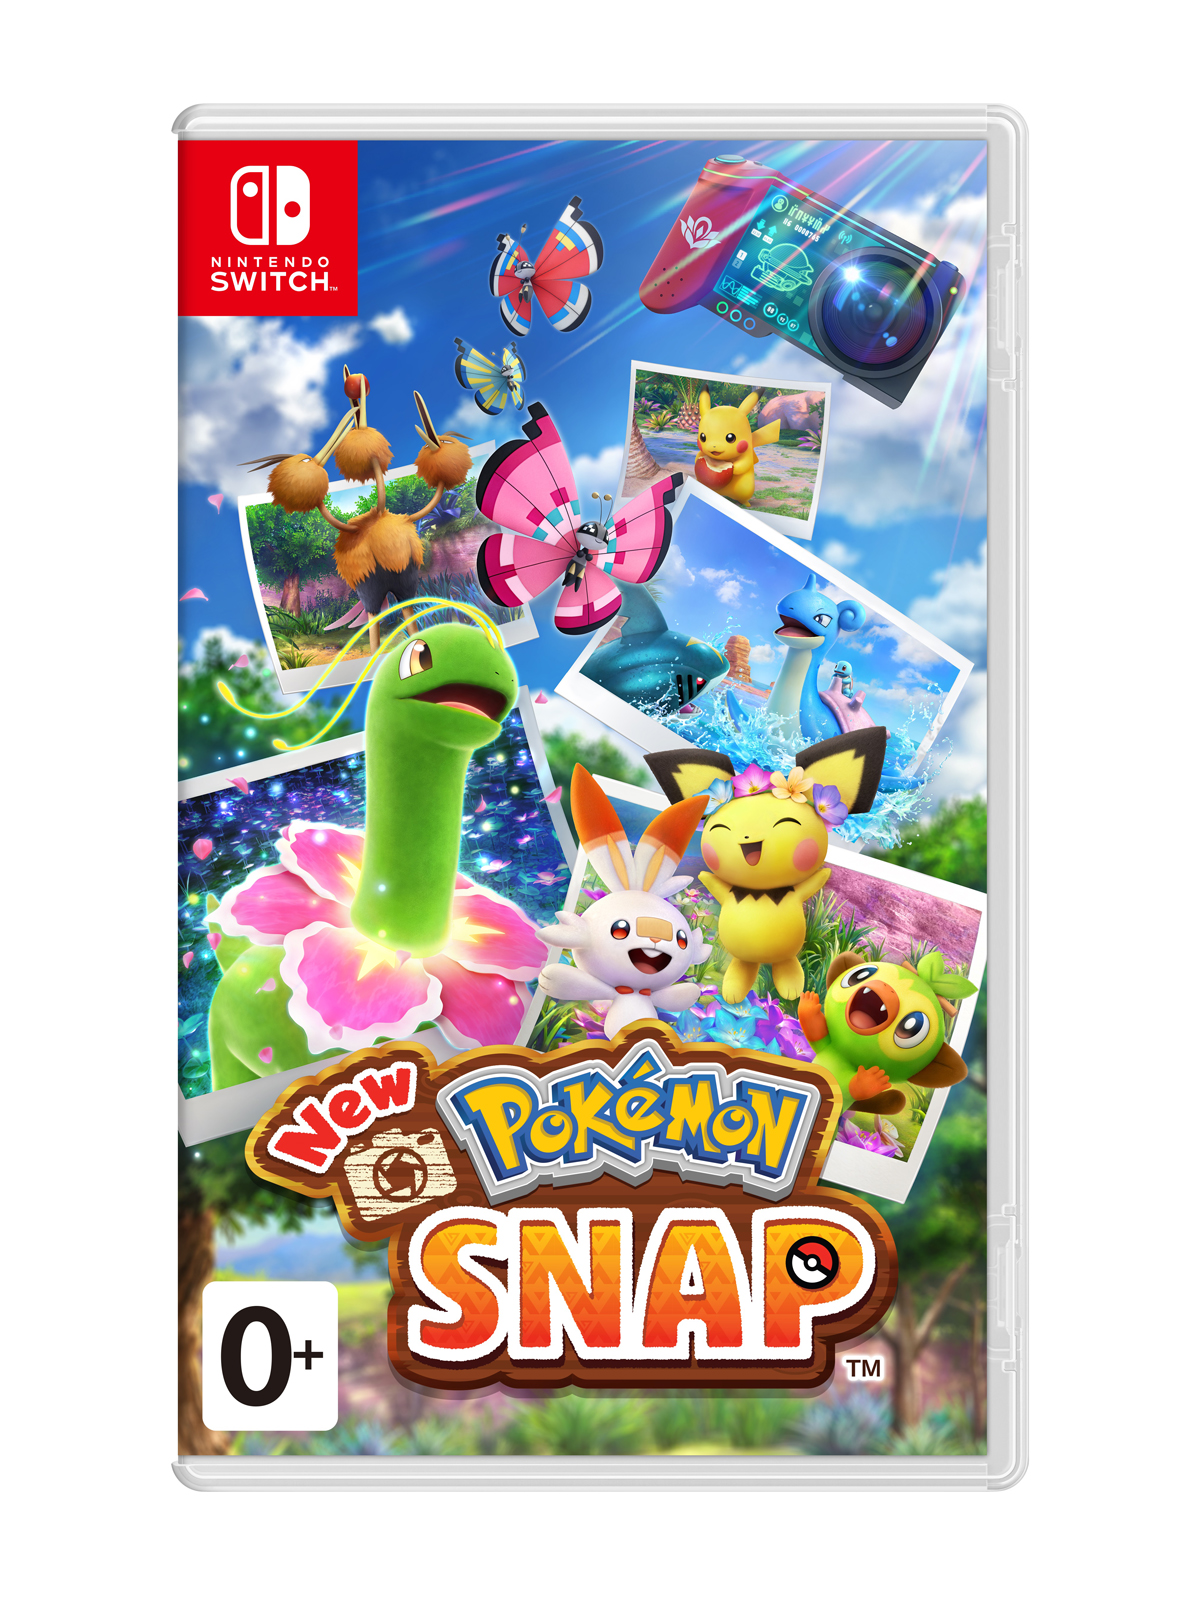 New Pokemon Snap [Switch] цена и фото